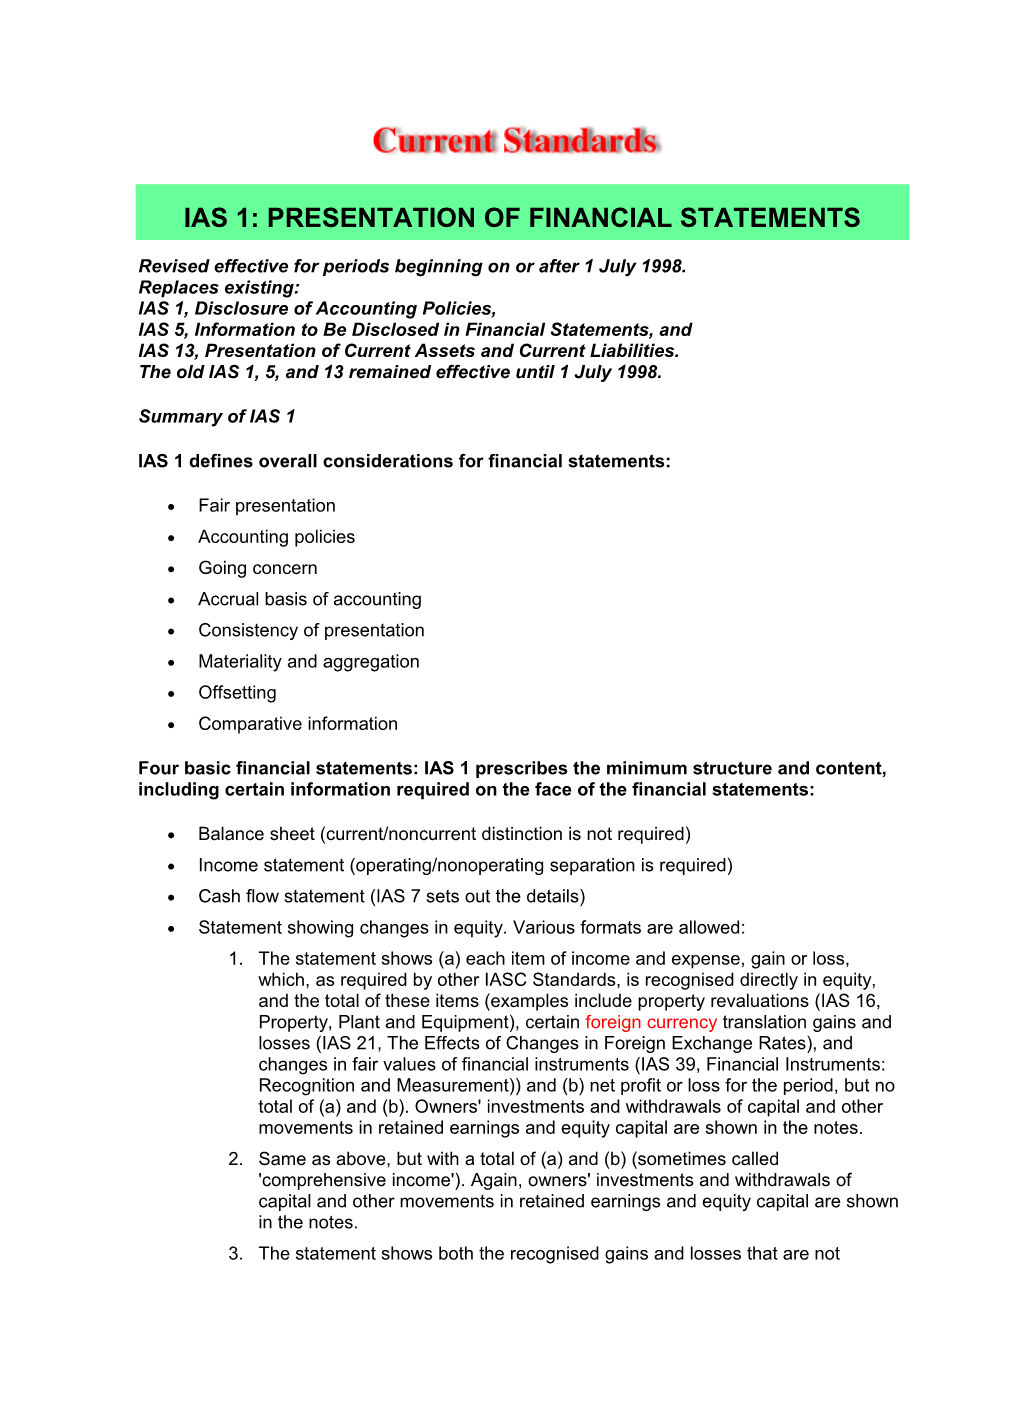 Ias 1: Presentation of Financial Statements